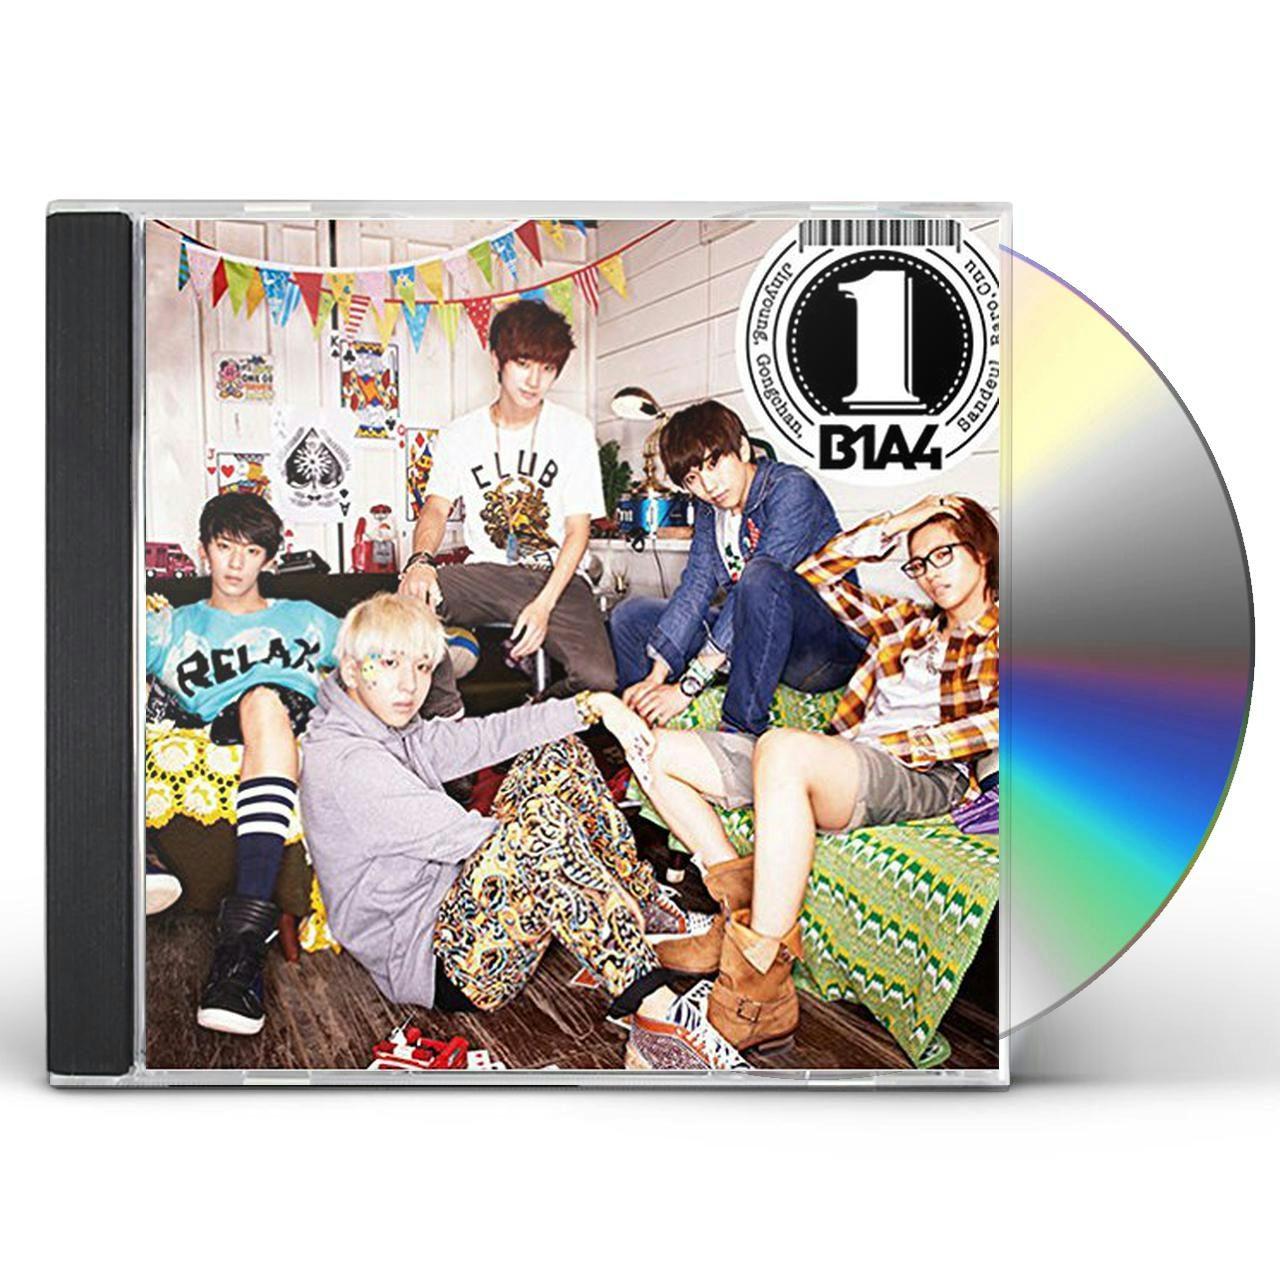 b1a4 1 (japanese studio album) cd $27.49$24.49